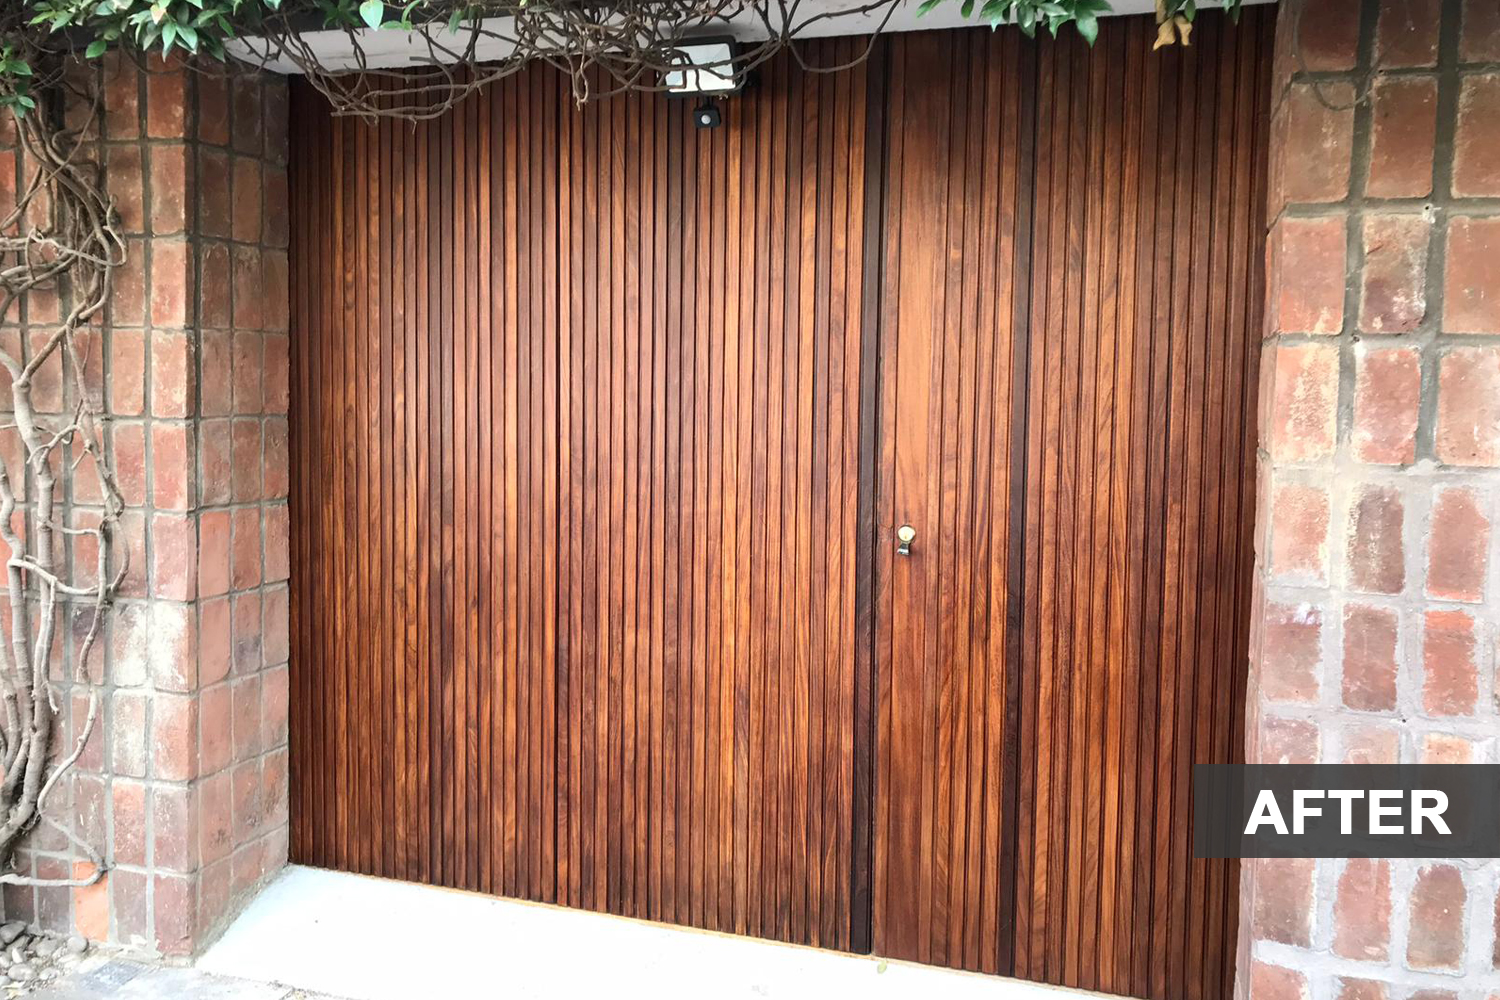 A wooden door after restoration